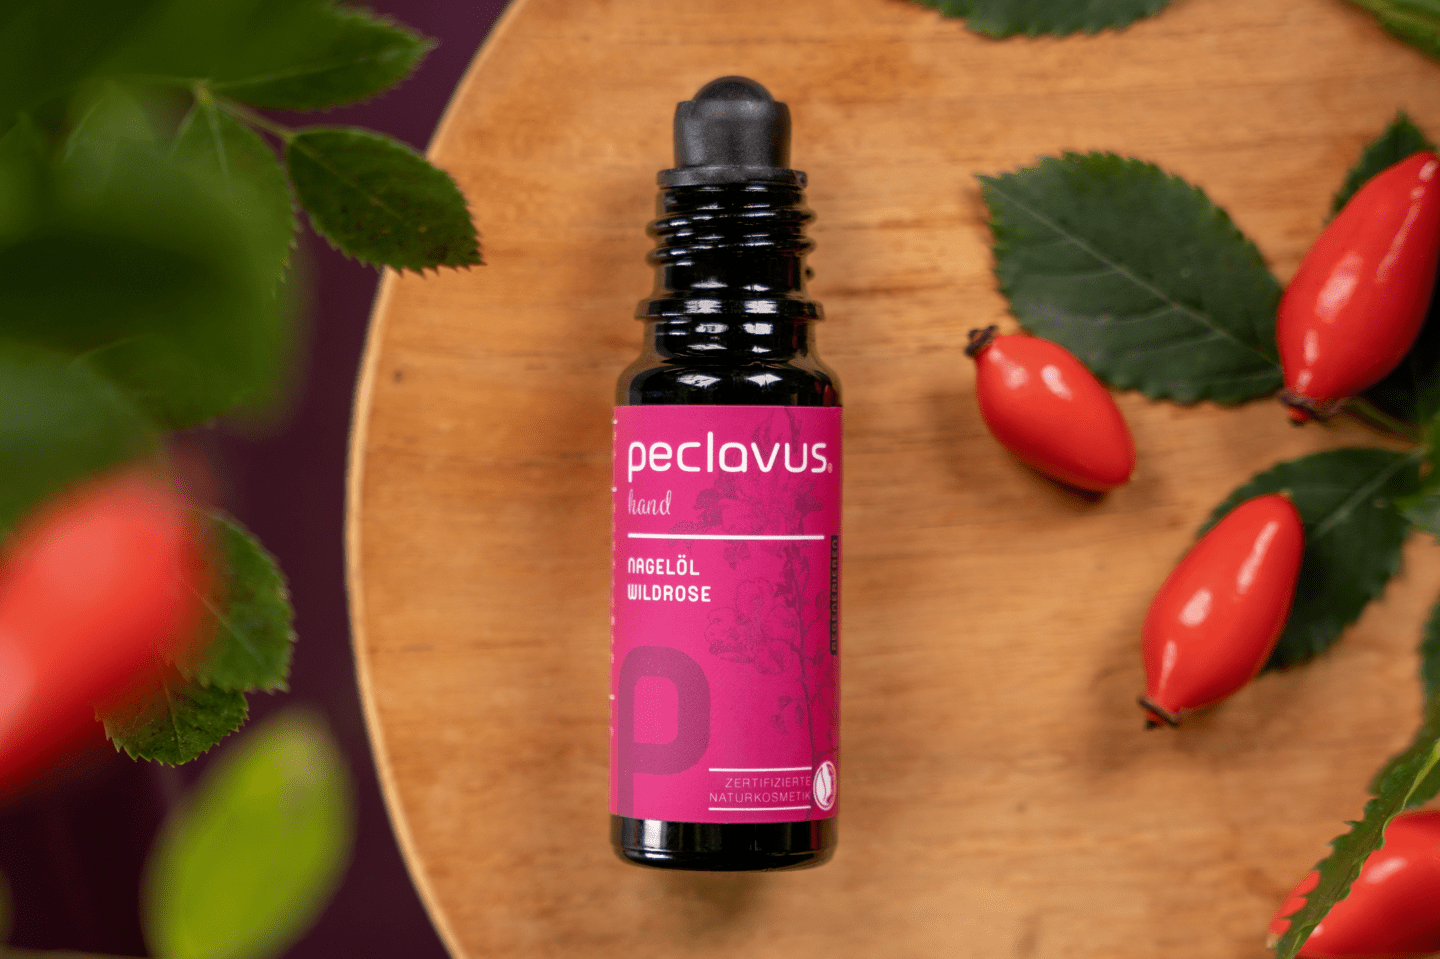 peclavus - Nagelöl Wildrose | Regenerieren, 10 ml